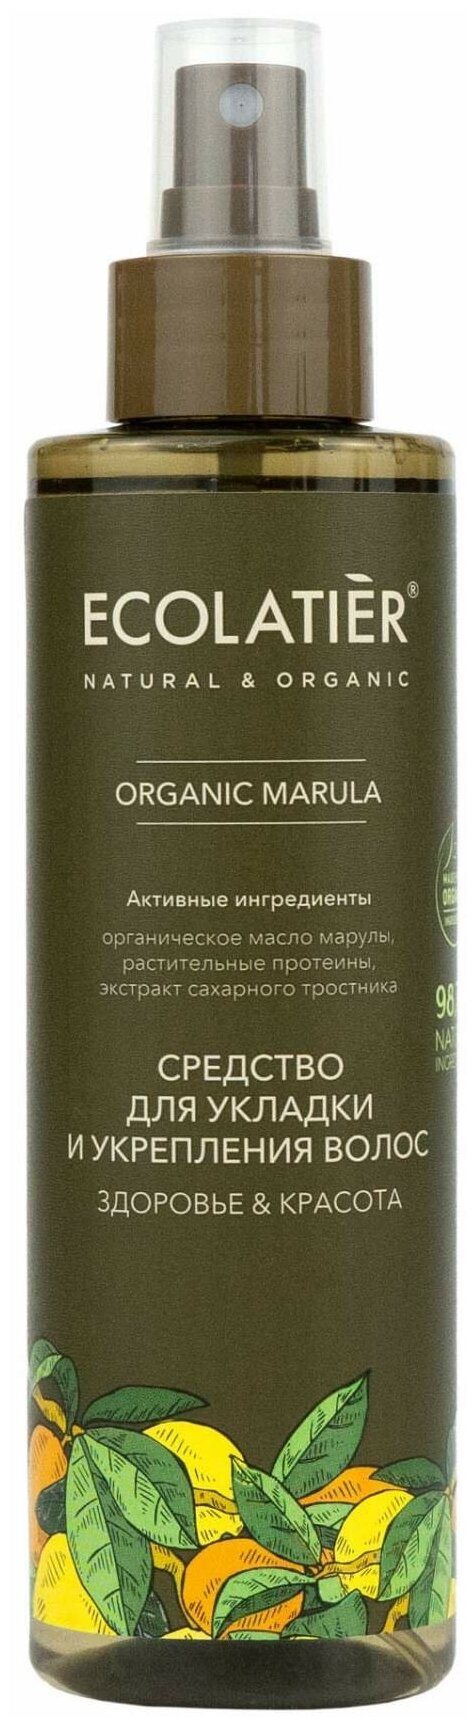 Ecolatier Organic Farm GREEN "MARULA Oil" Средство д/укл. и укрепл. волос здоровье и красота 200 мл